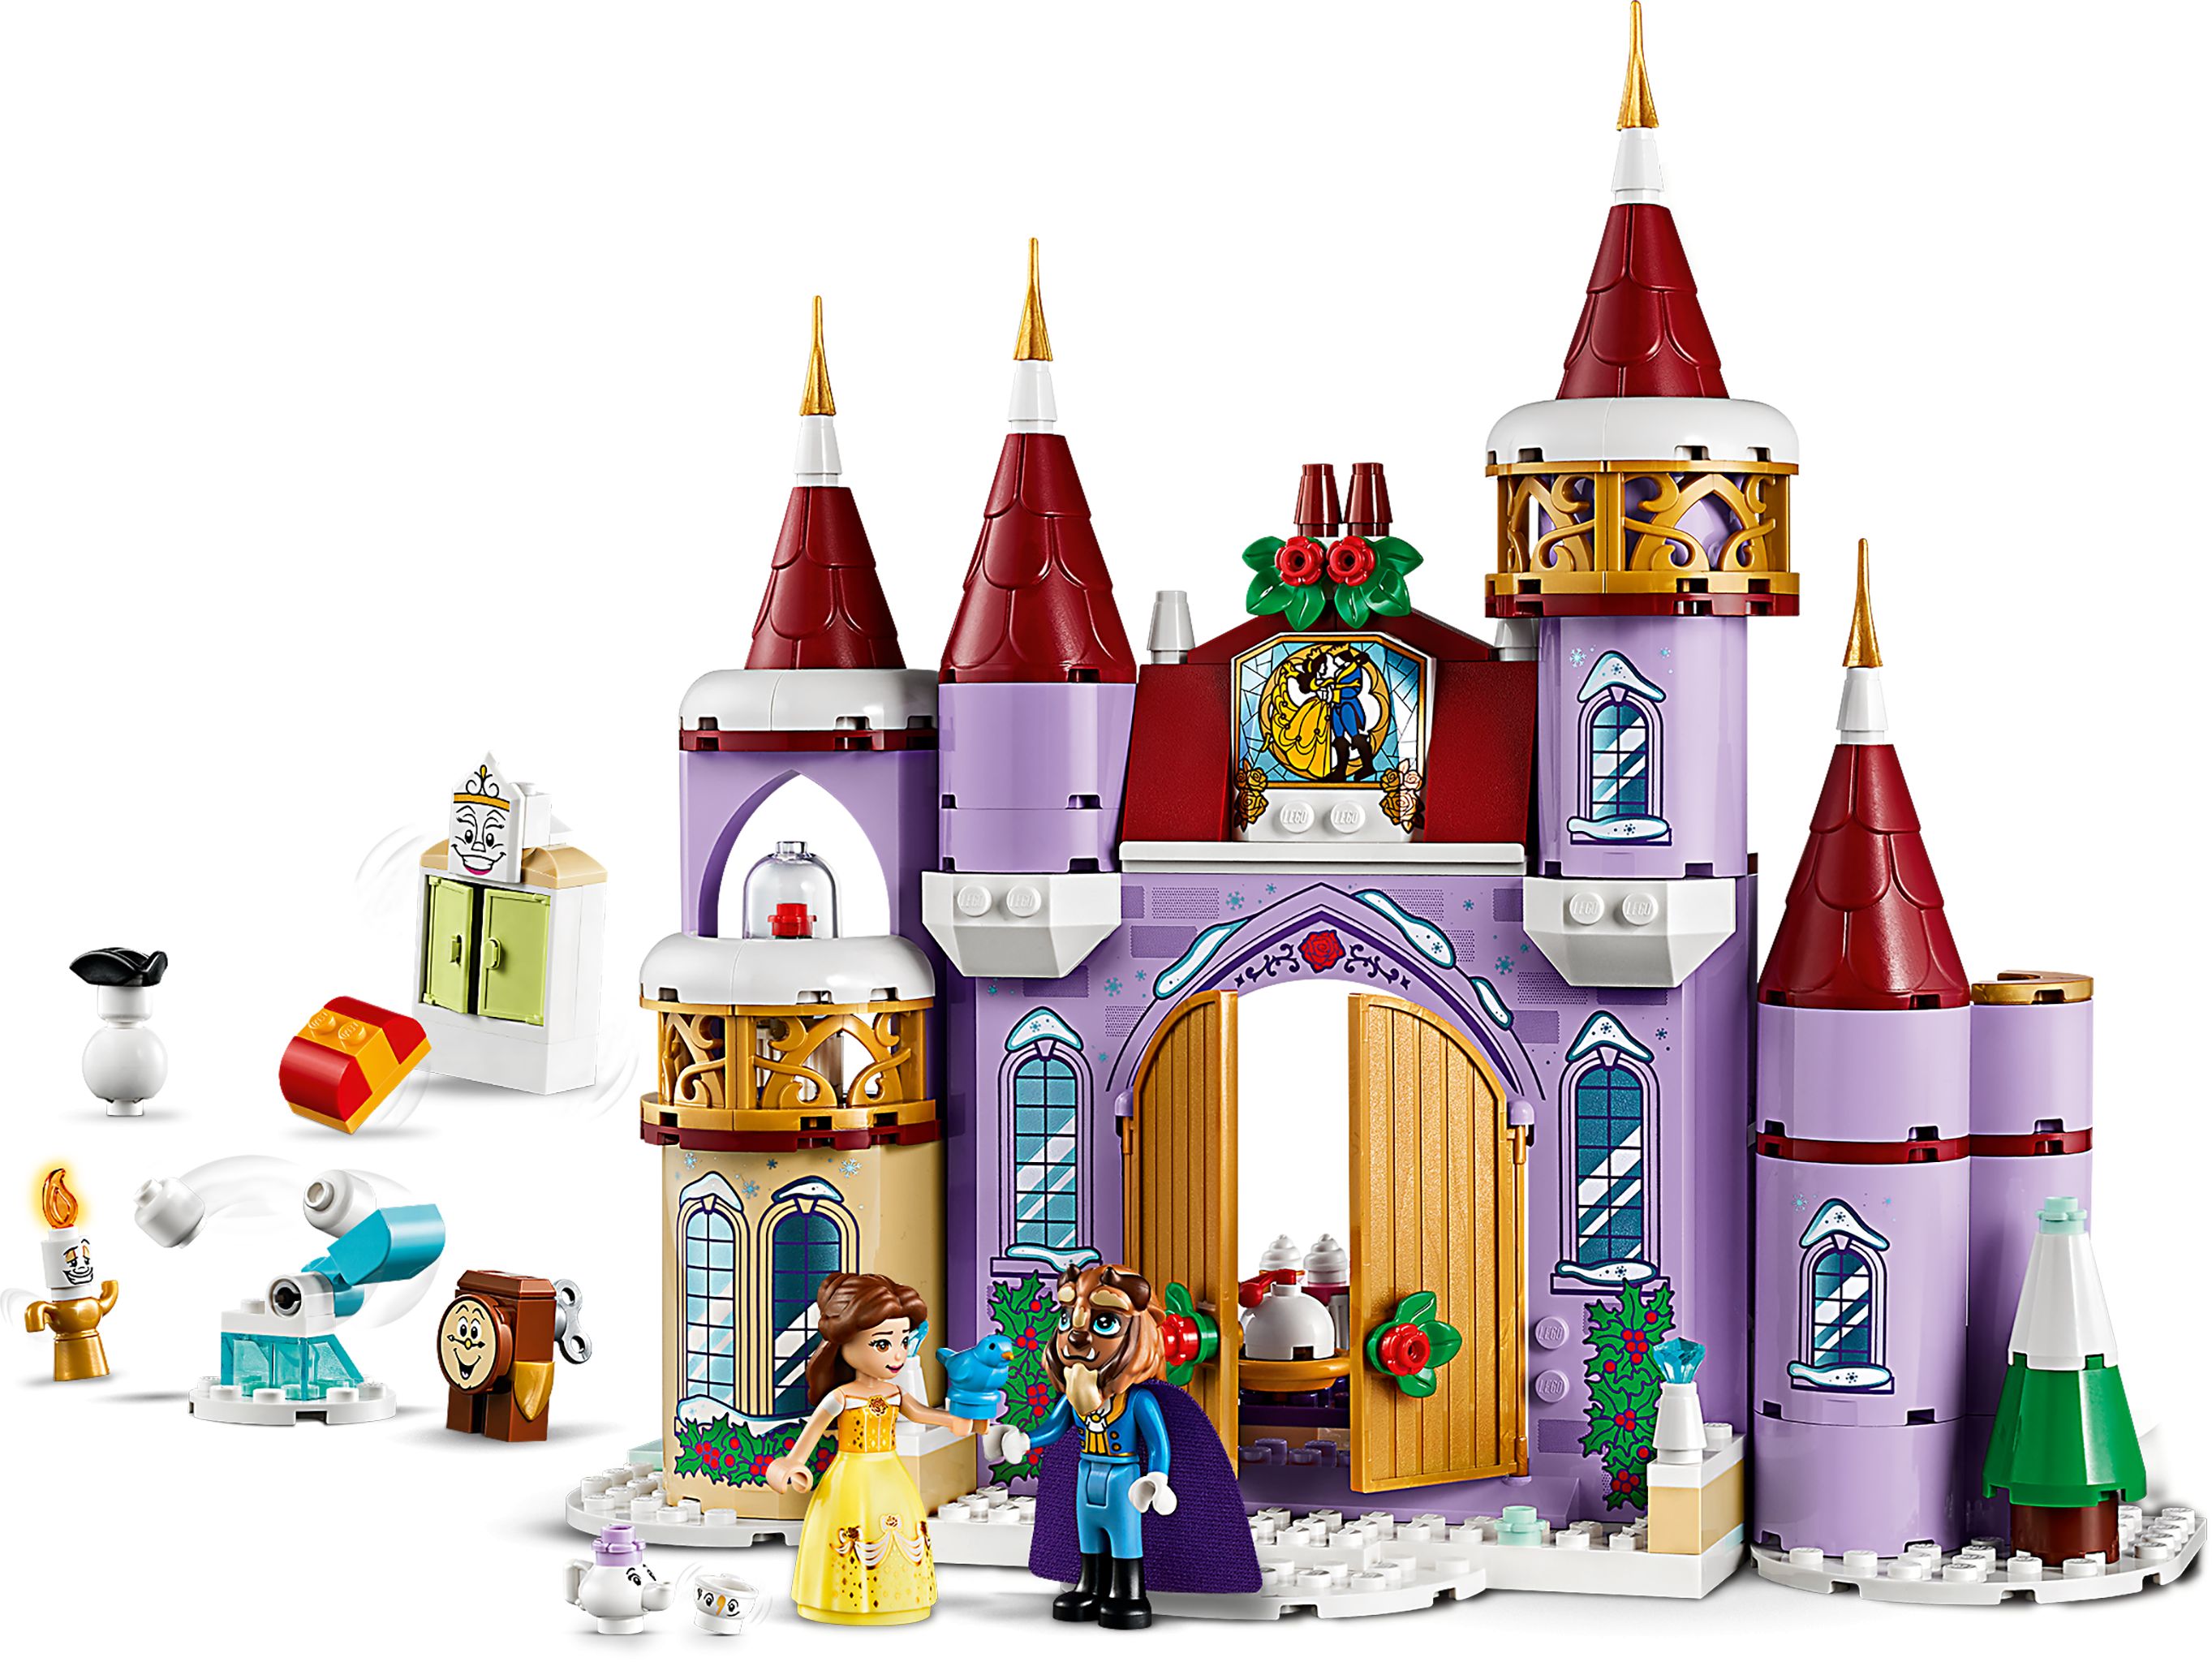 LEGO Disney 43180 Belles winterliches Schloss LEGO_43180_alt3.jpg